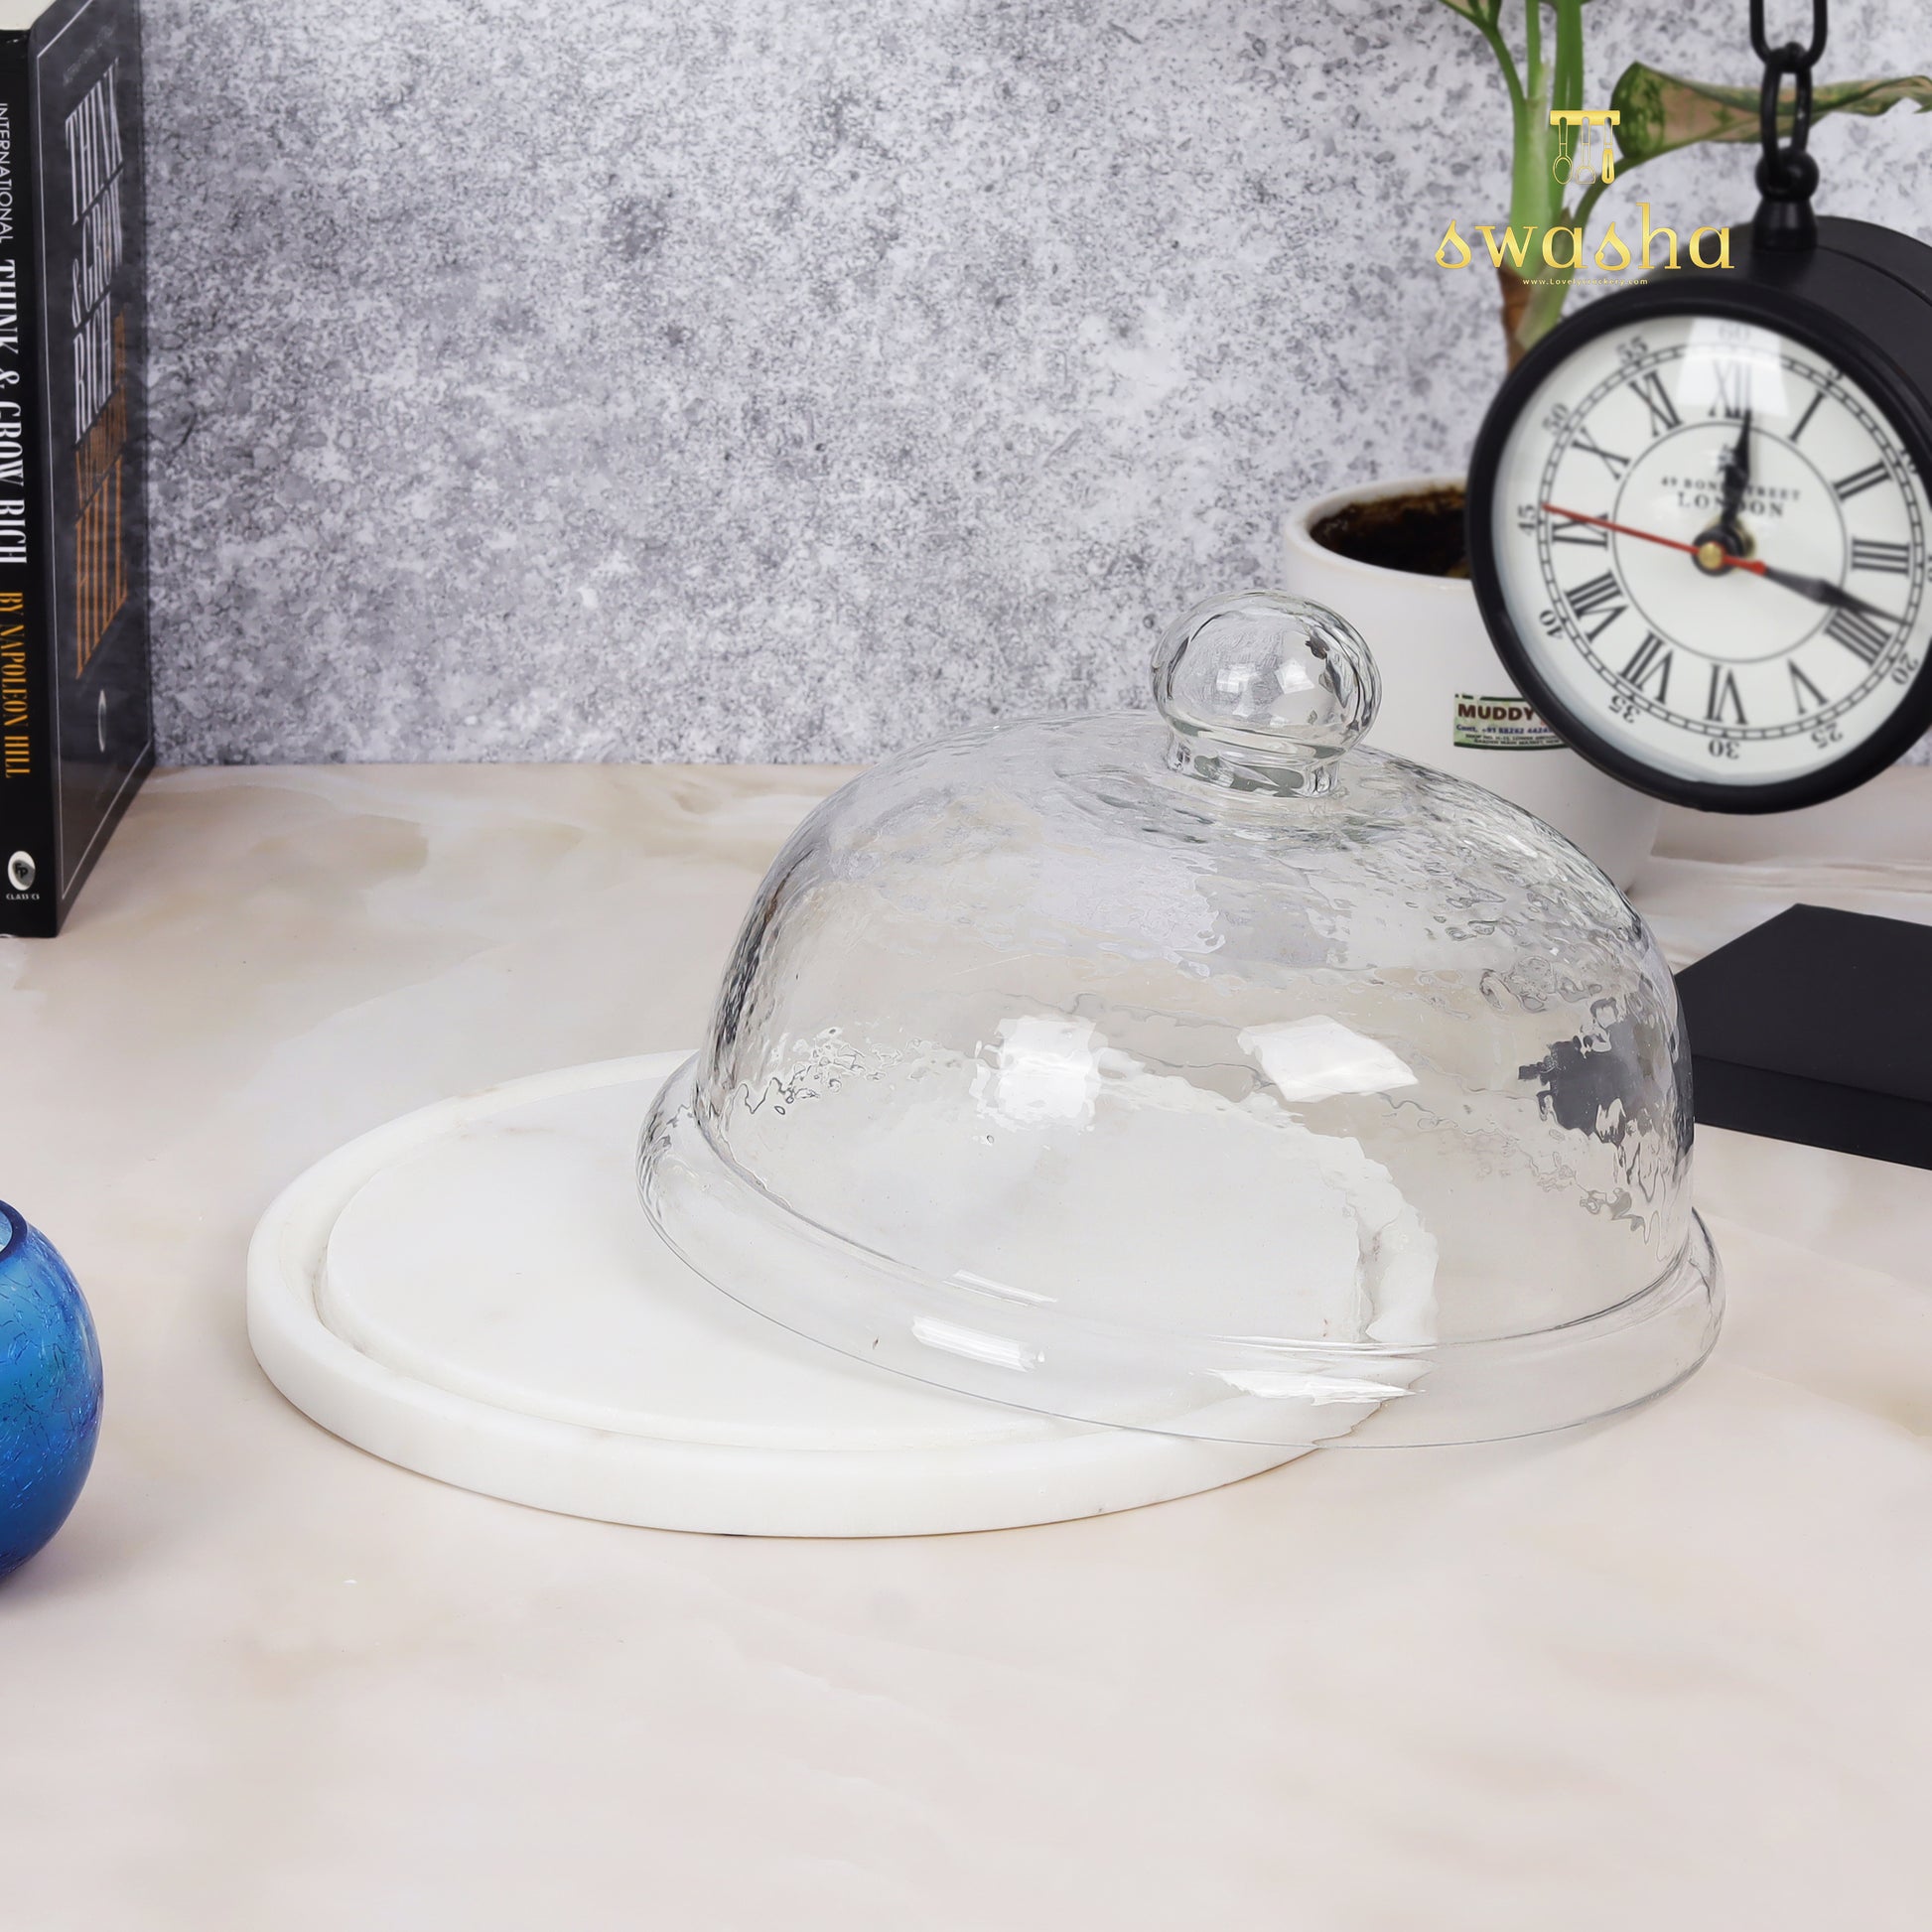 Glass-domed cake stand showcasing elegant dessert presentation for special occasions